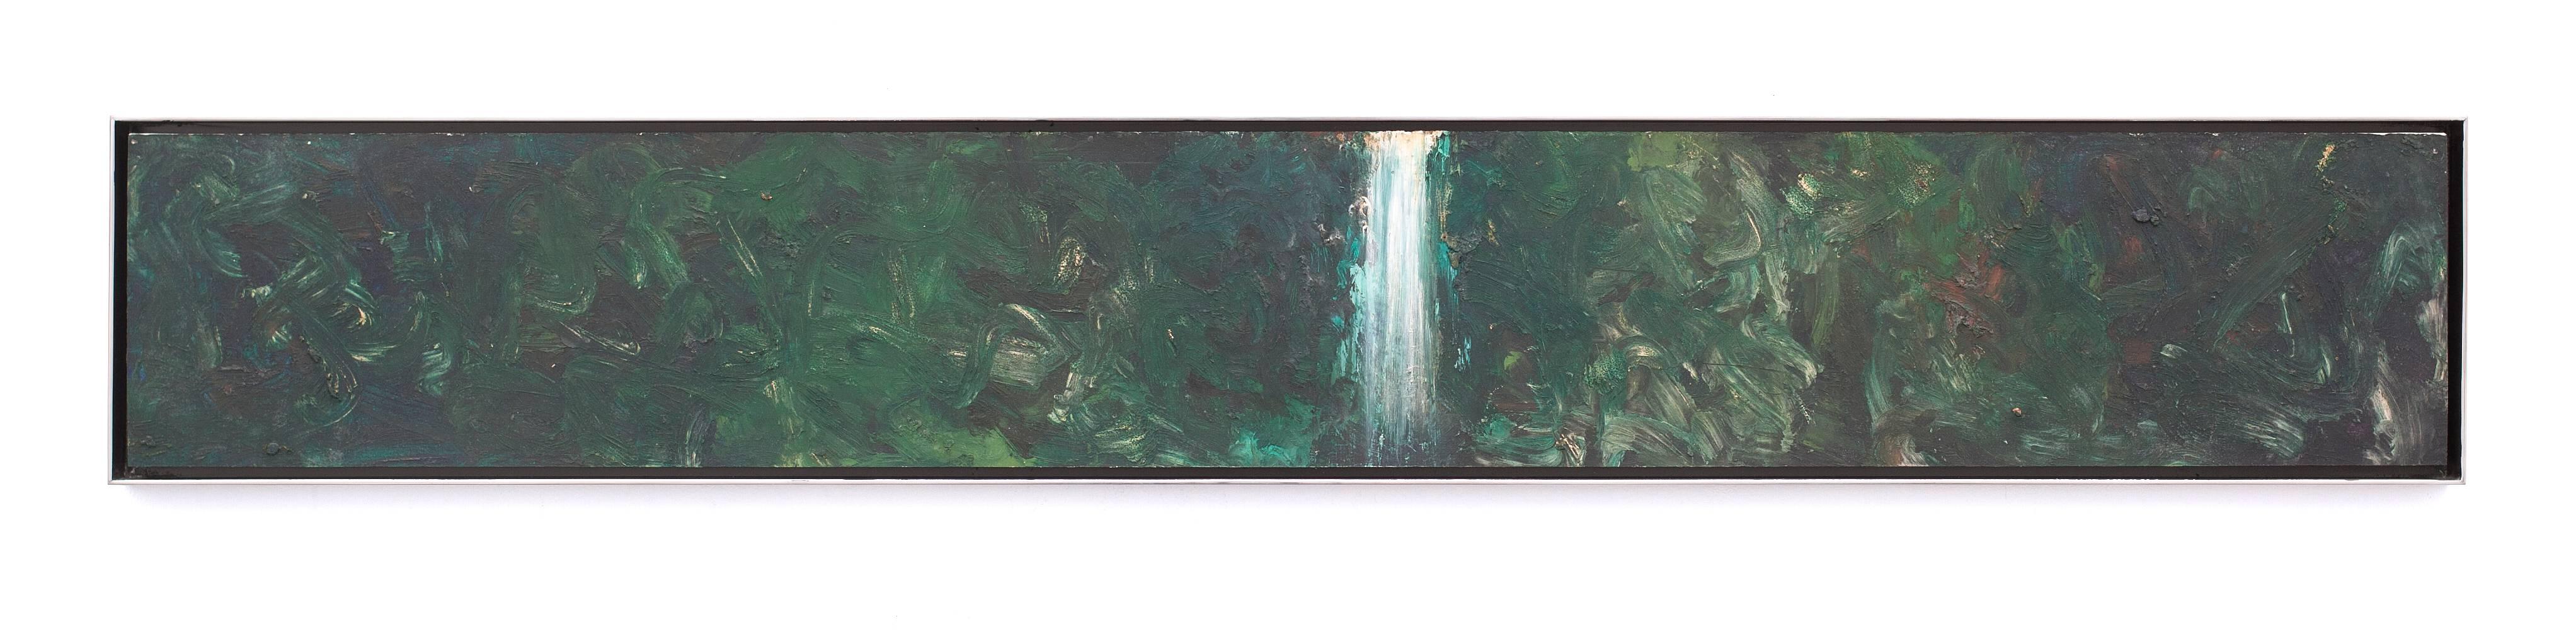 Joe Goode Landscape Painting - Waterfall Painting 005